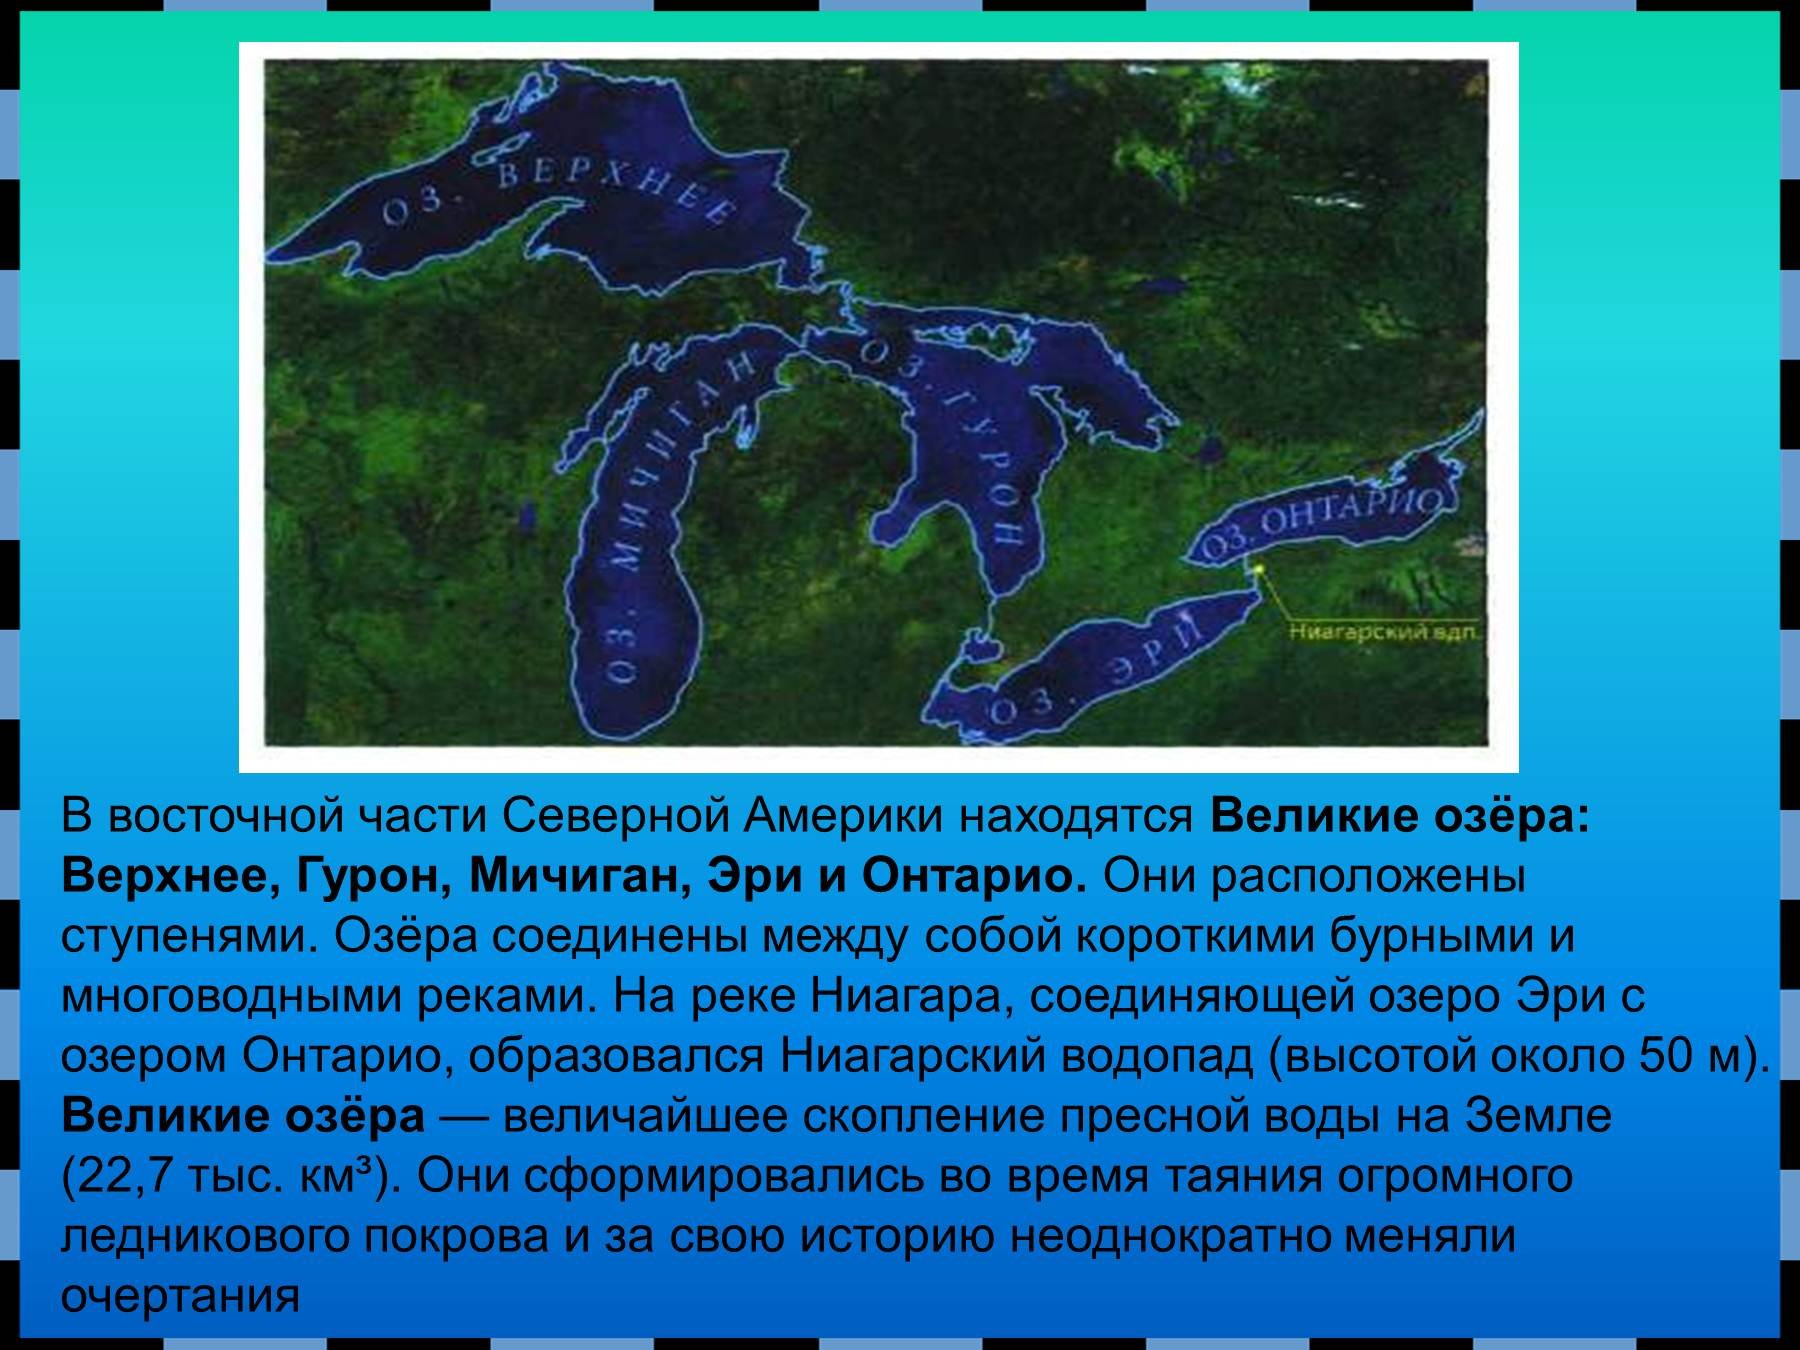 Назовите великие американские озера. Великие озера верхнее озеро Гурон Мичиган Эри и Онтарио. Озеро Гурон Северная Америка. Озера: Великие озера (верхнее Гурон Мичиган Эри Онтарио) на карте. Озеро верхнее Гурон Мичиган Эри.